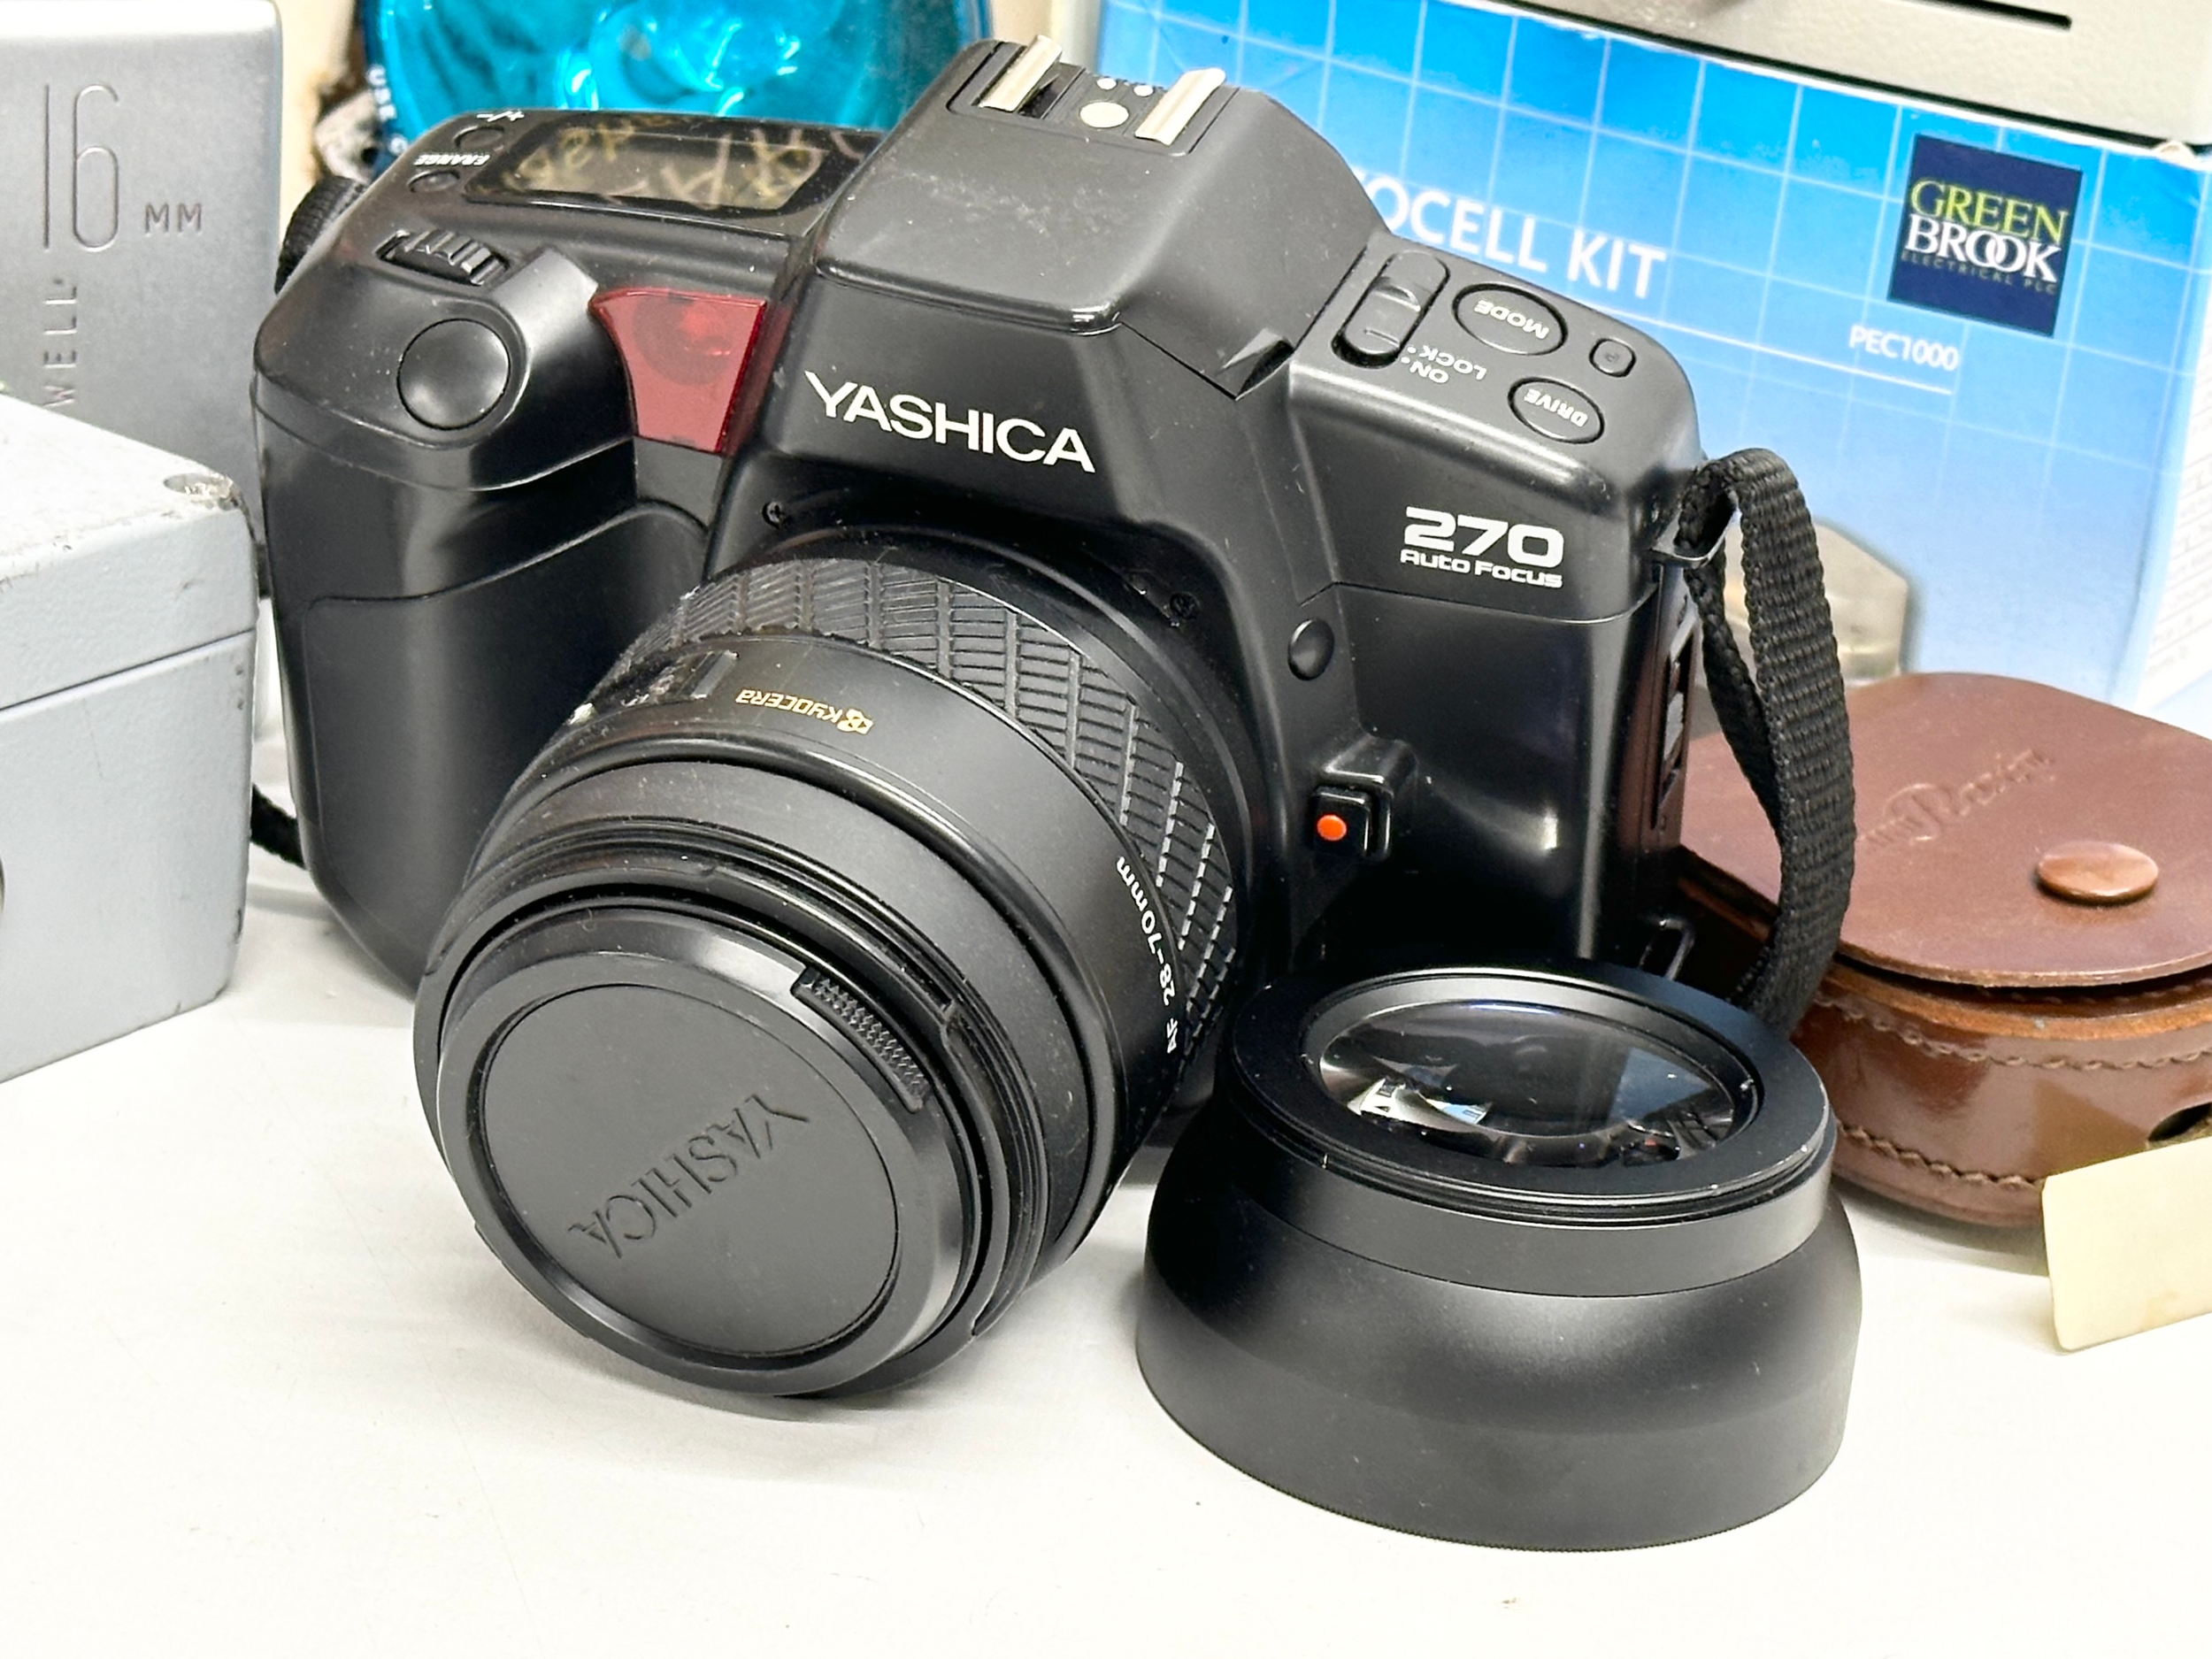 A Yashiba 270 Auto Focus camera, Polaroid Flashgun etc - Image 2 of 4